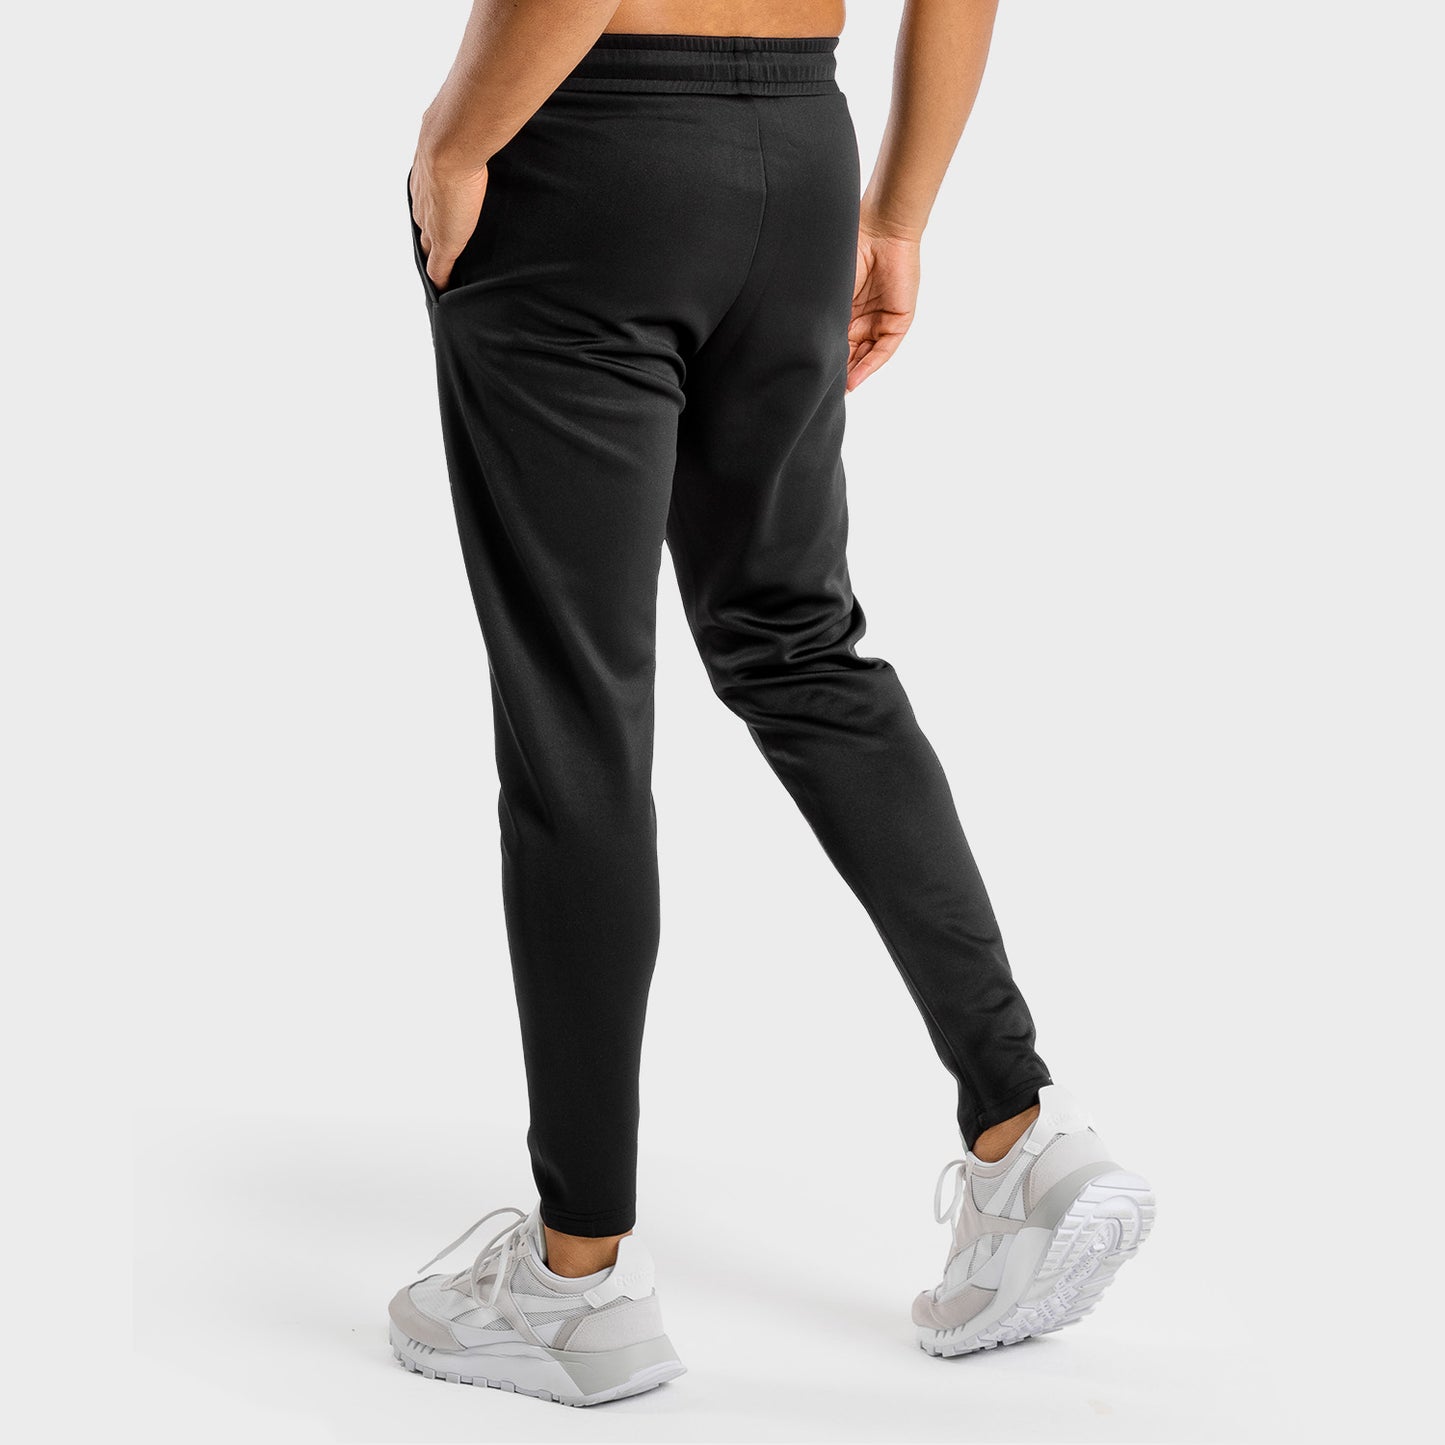 squatwolf-gym-wear-primal-joggers-men-black-workout-pants-for-men